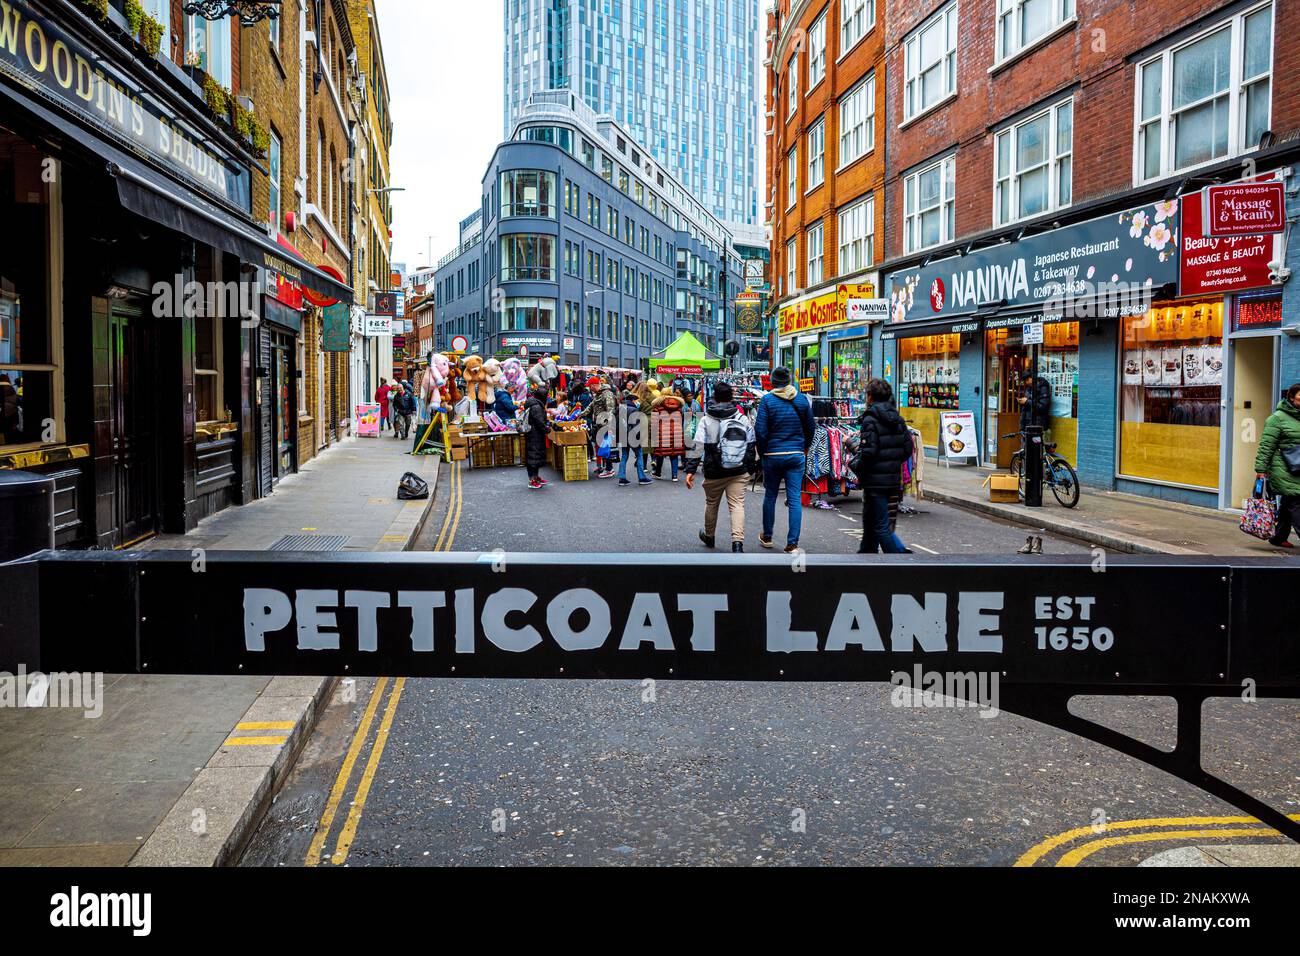 Petticoat Lane Market London. Established 1650 Petticoat Lane Market is a fashion & clothing market in Spitalfields London. London's oldest street mkt. Stock Photo